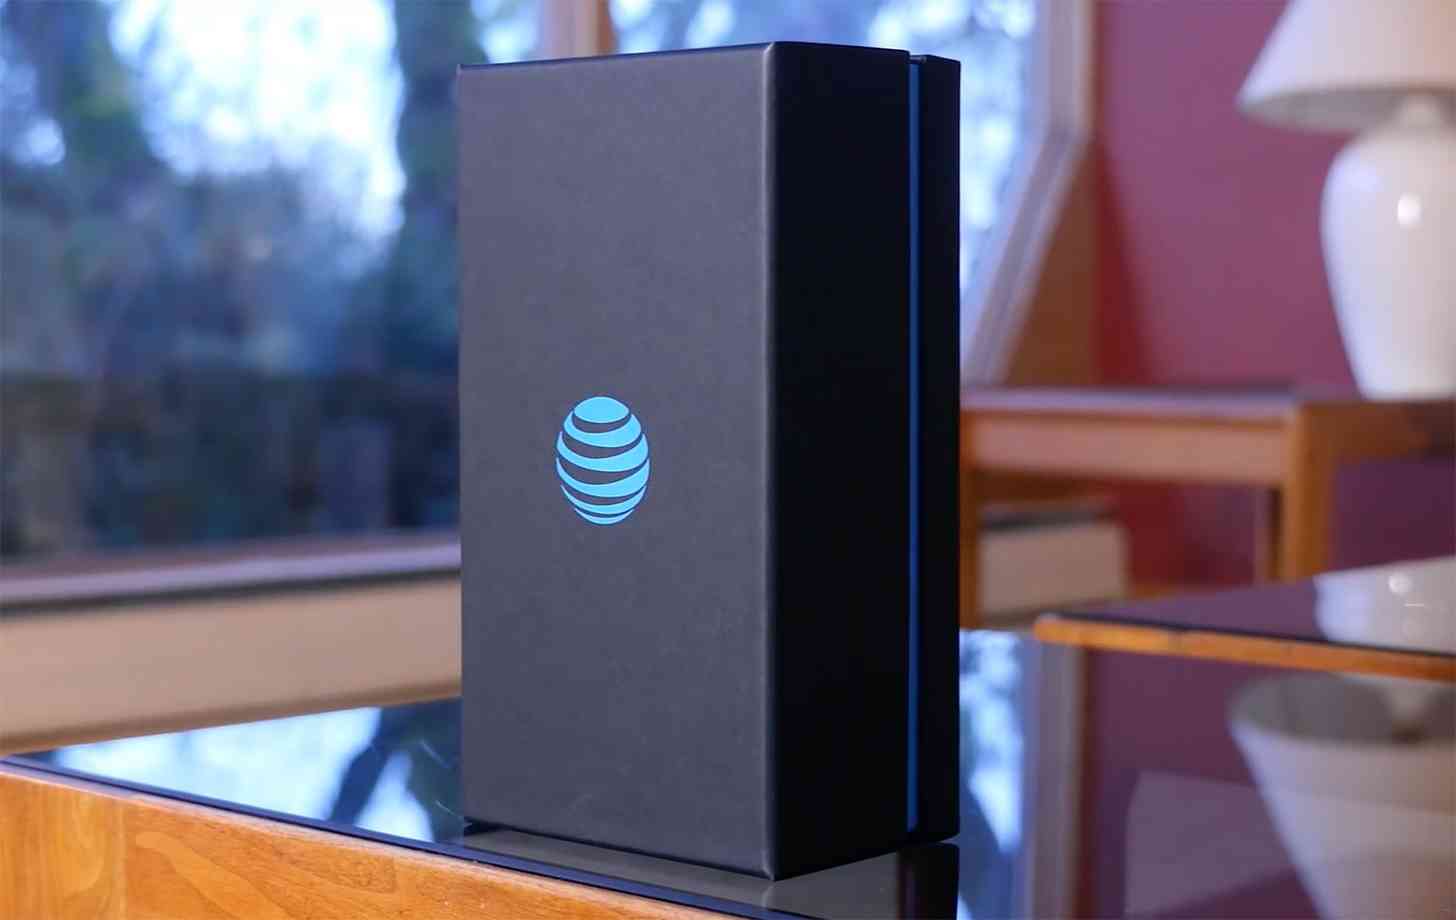 AT&T logo packaging